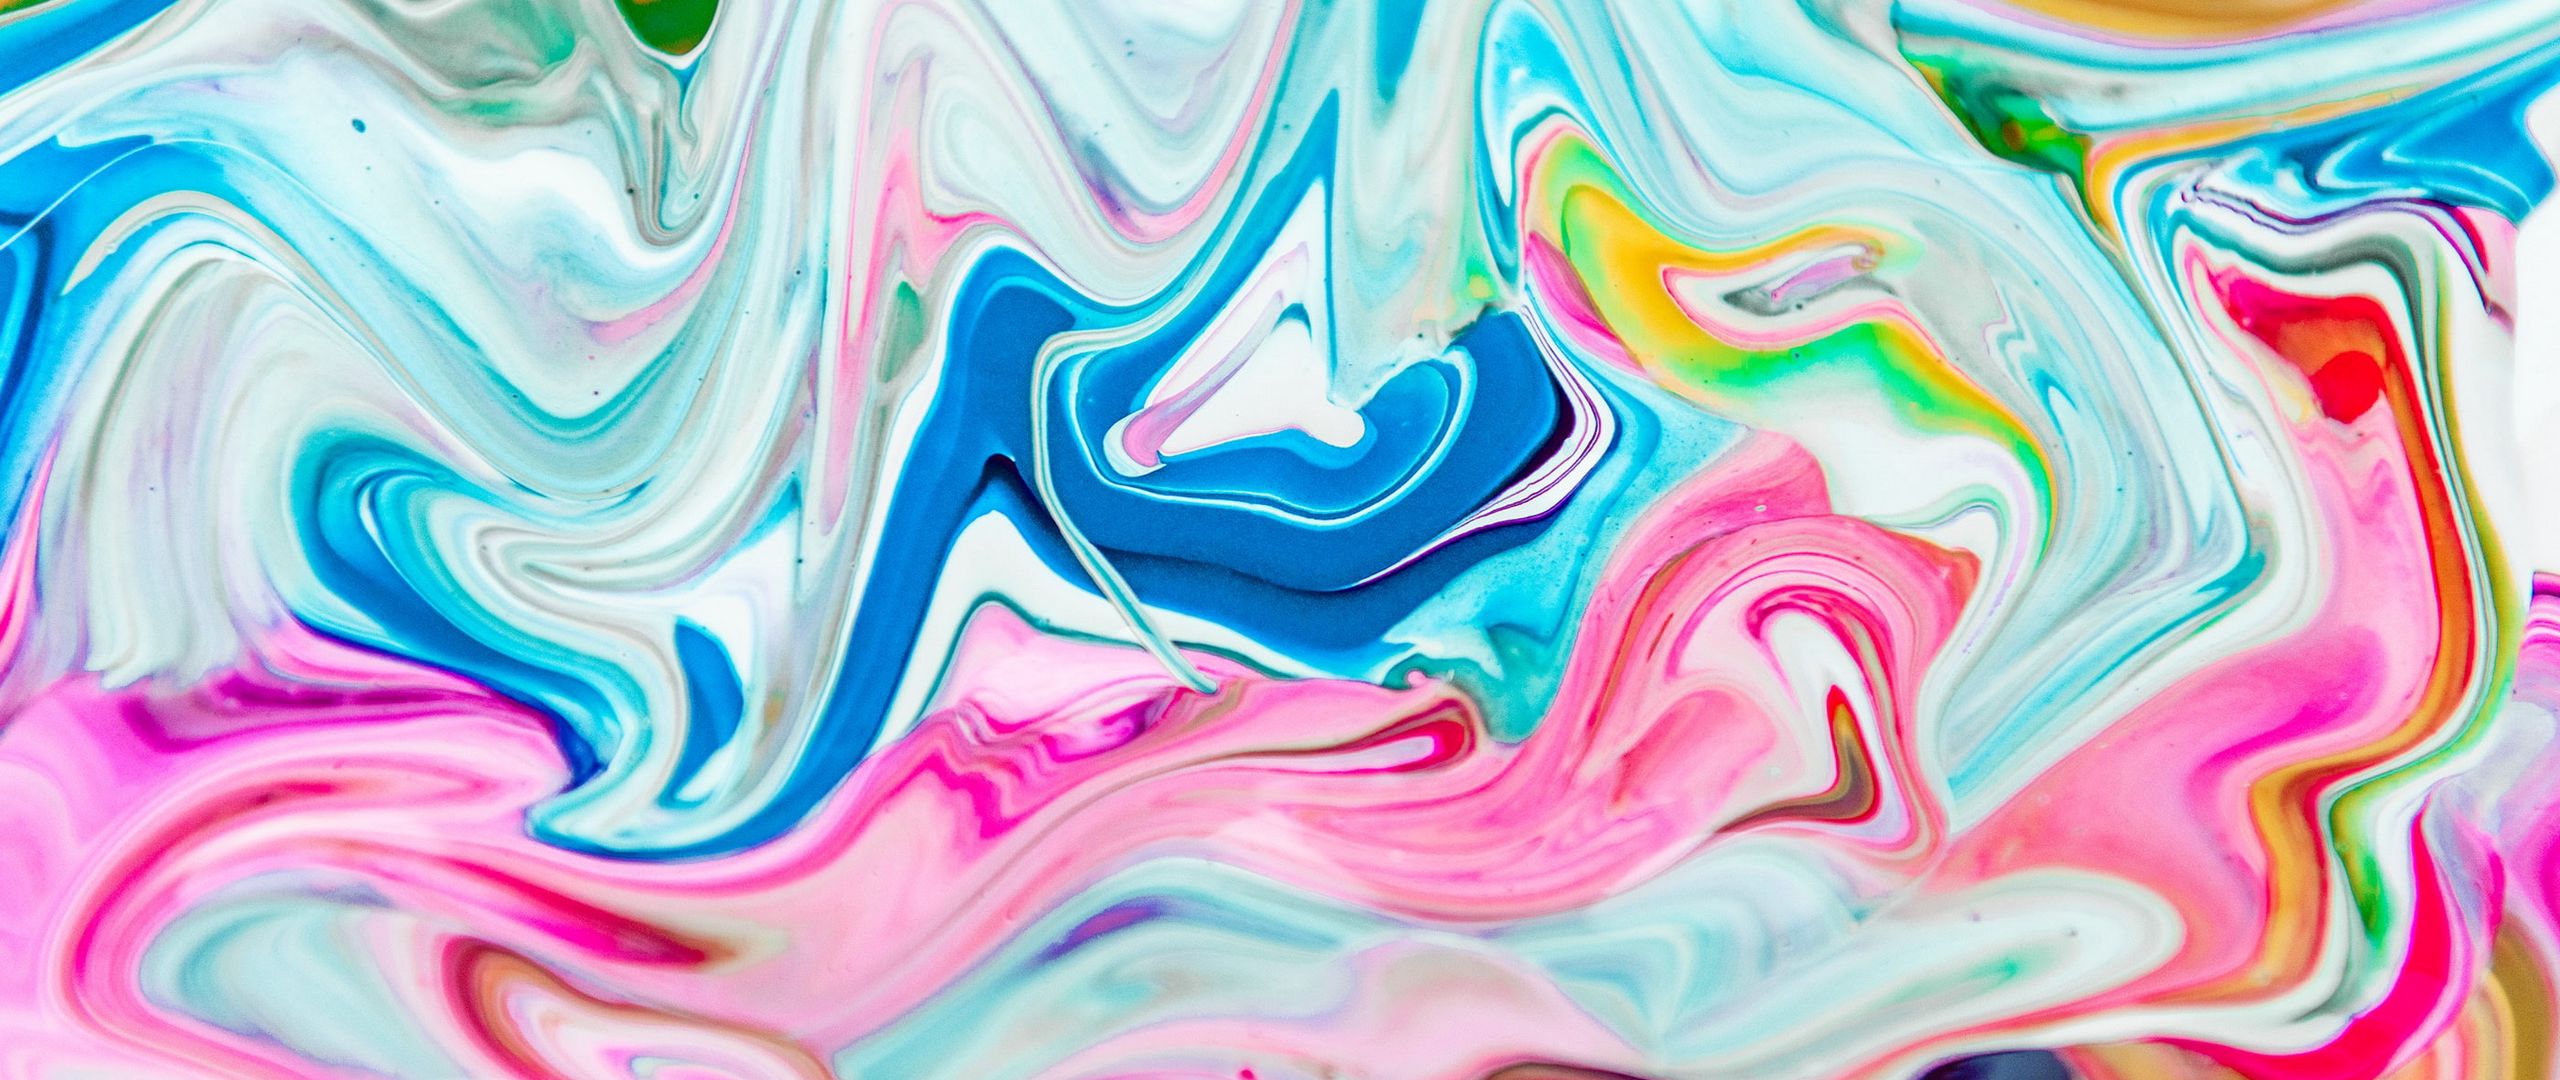 Wallpaper Paint Liquid Stains